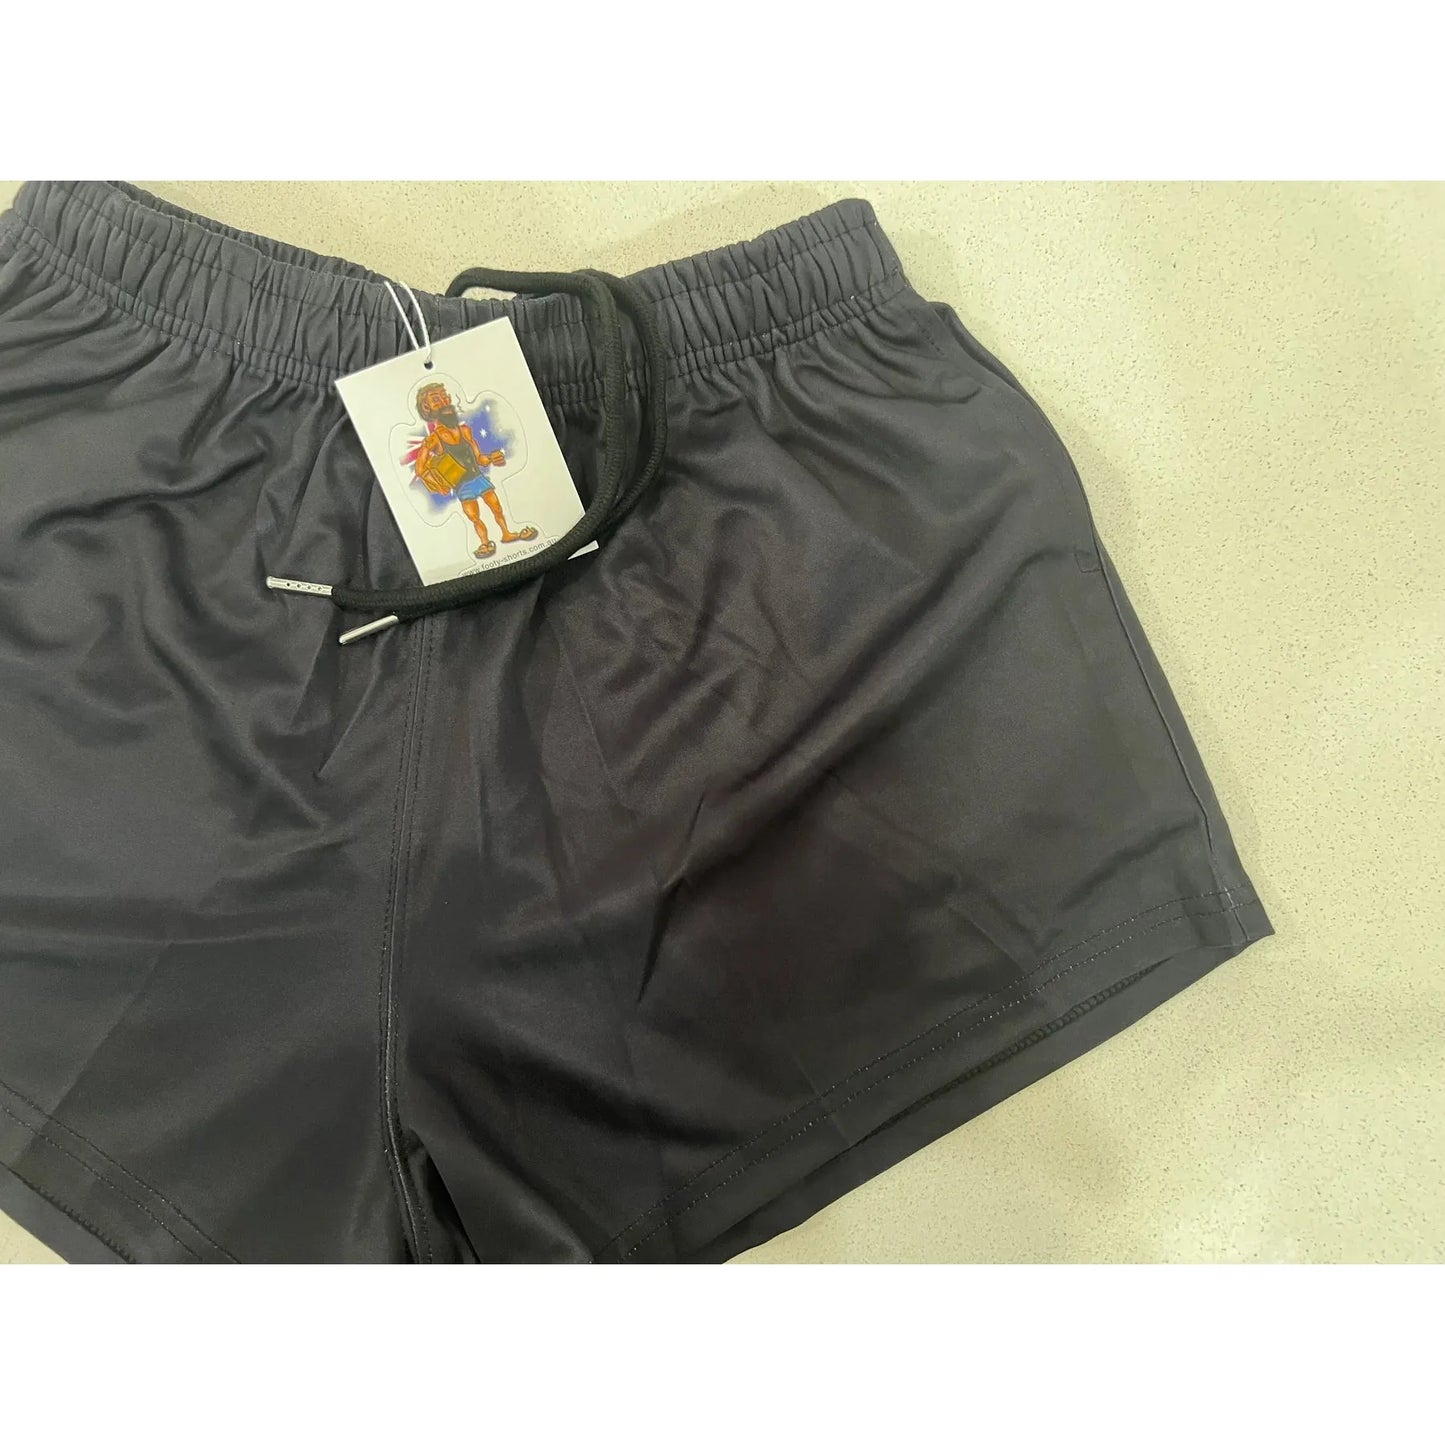 Unisex Aussie Footy Shorts Plain Black with Pockets